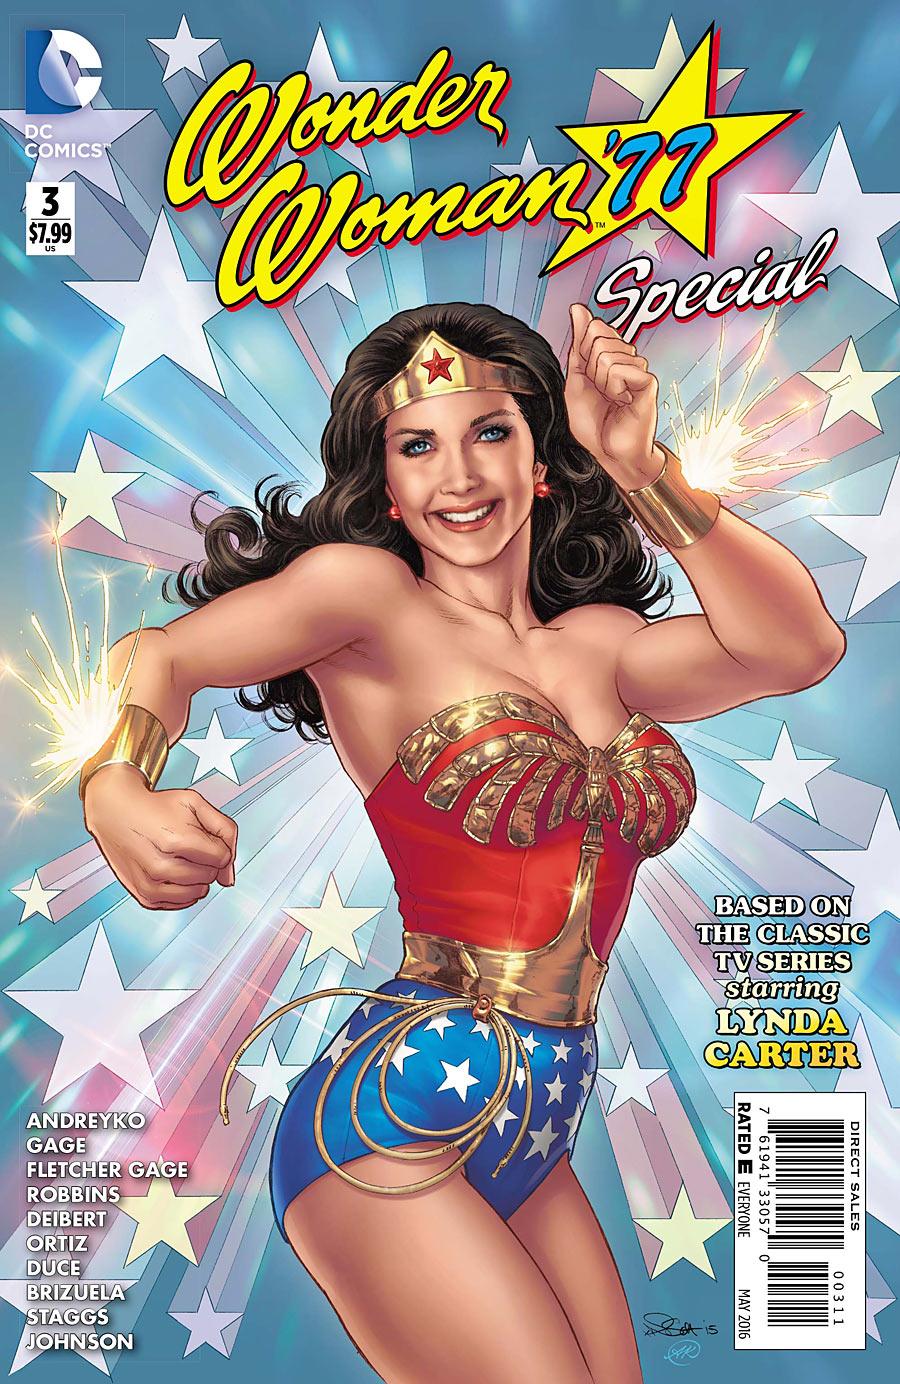 Wonder Woman '77 Special Vol. 1 #3